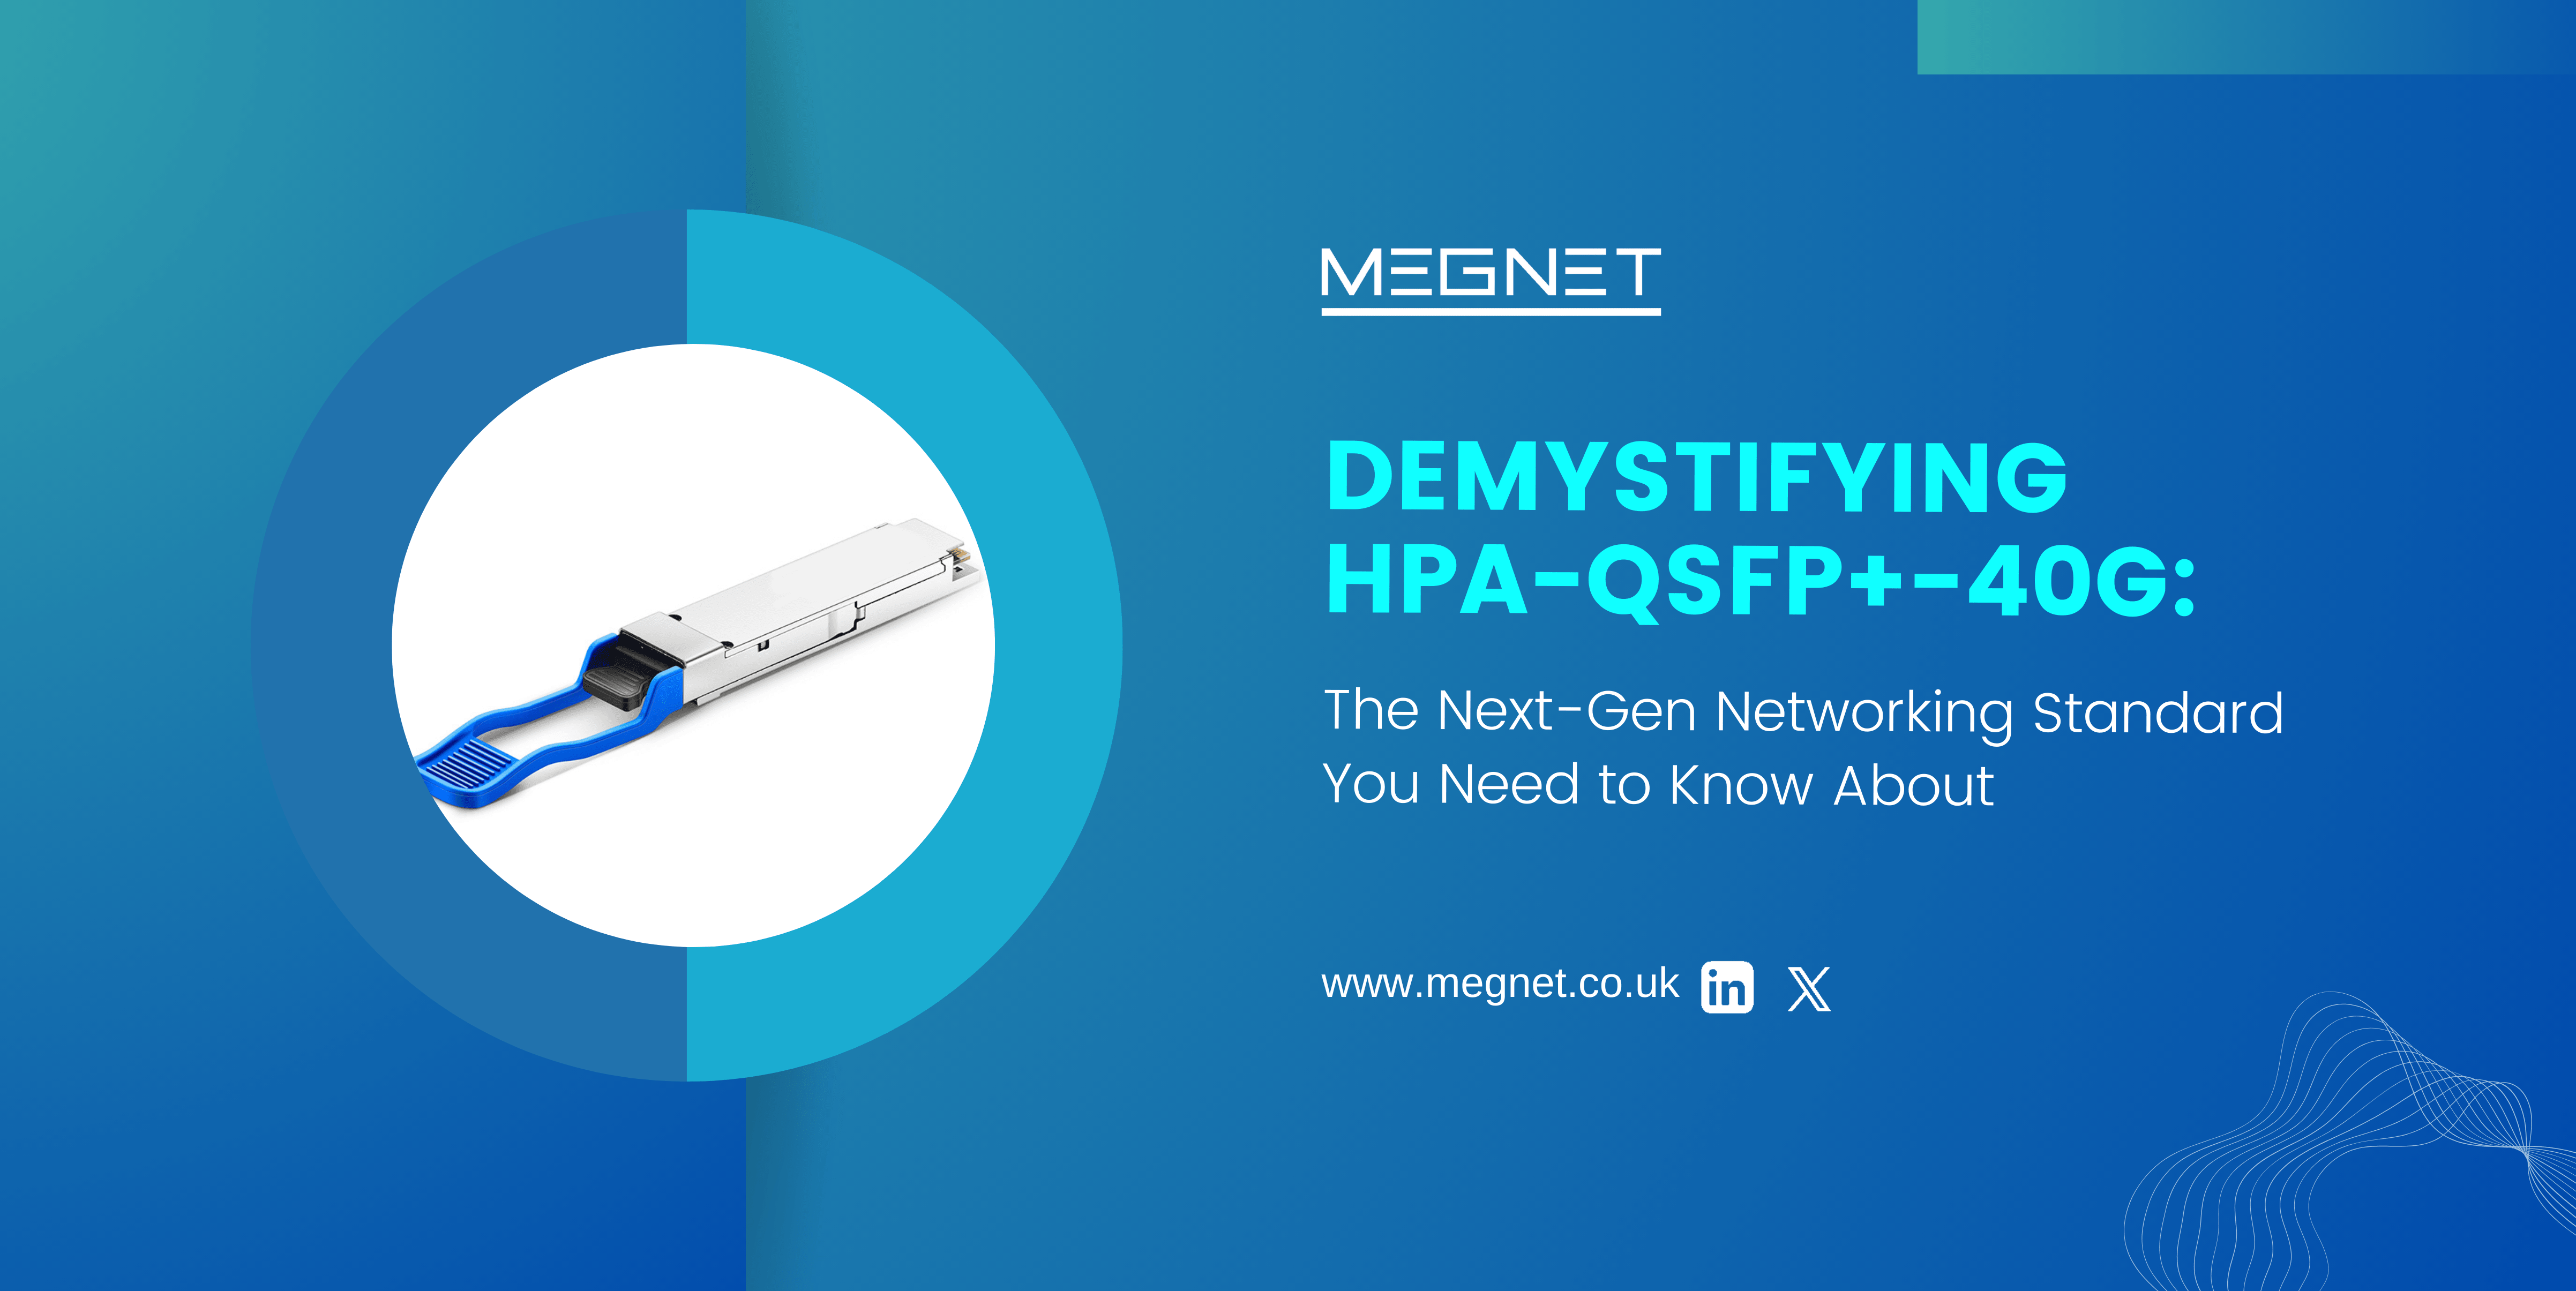 HPA- QSFP+-40G